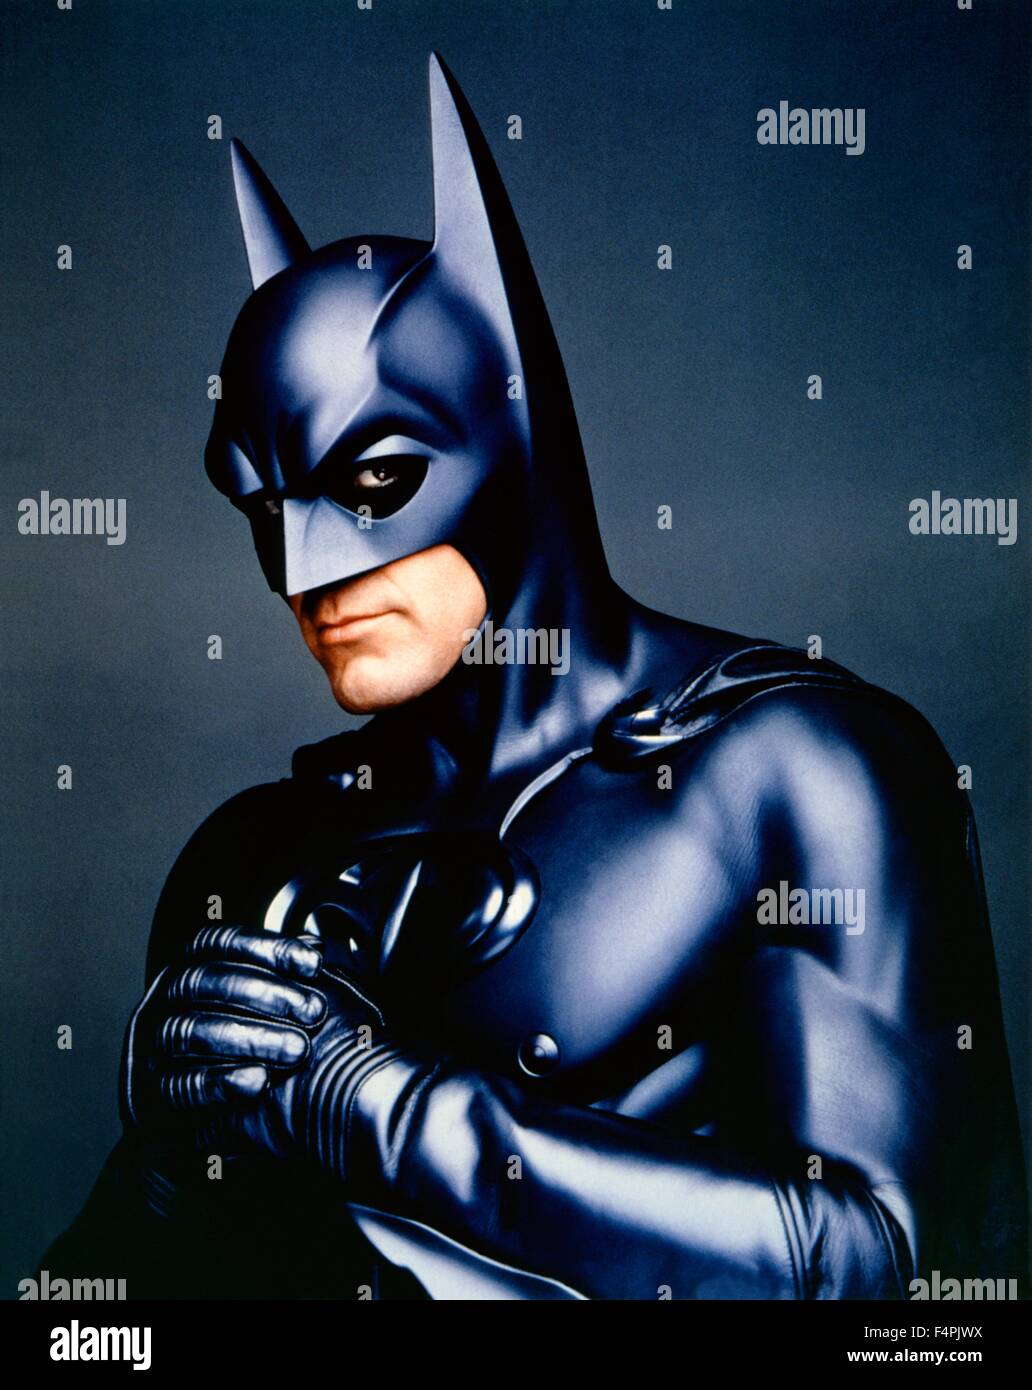 George Clooney / Batman & Robin / 1997 diretto da Joel Schumacher [Warner Bros Foto] Foto Stock